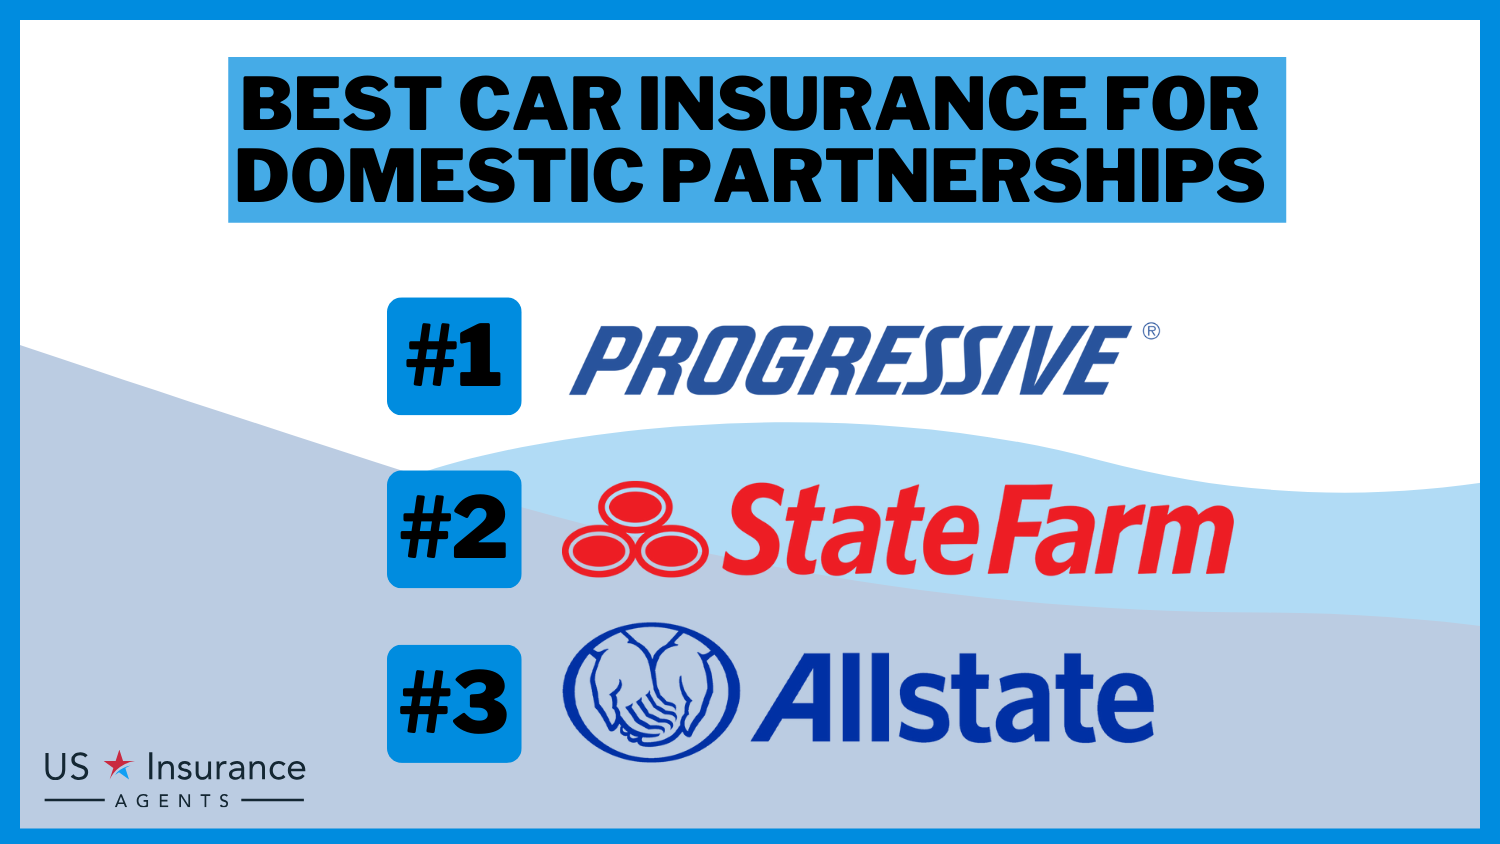 Best Car Insurance for Domestic Partnerships: Progressive, State Farm and Allstate.